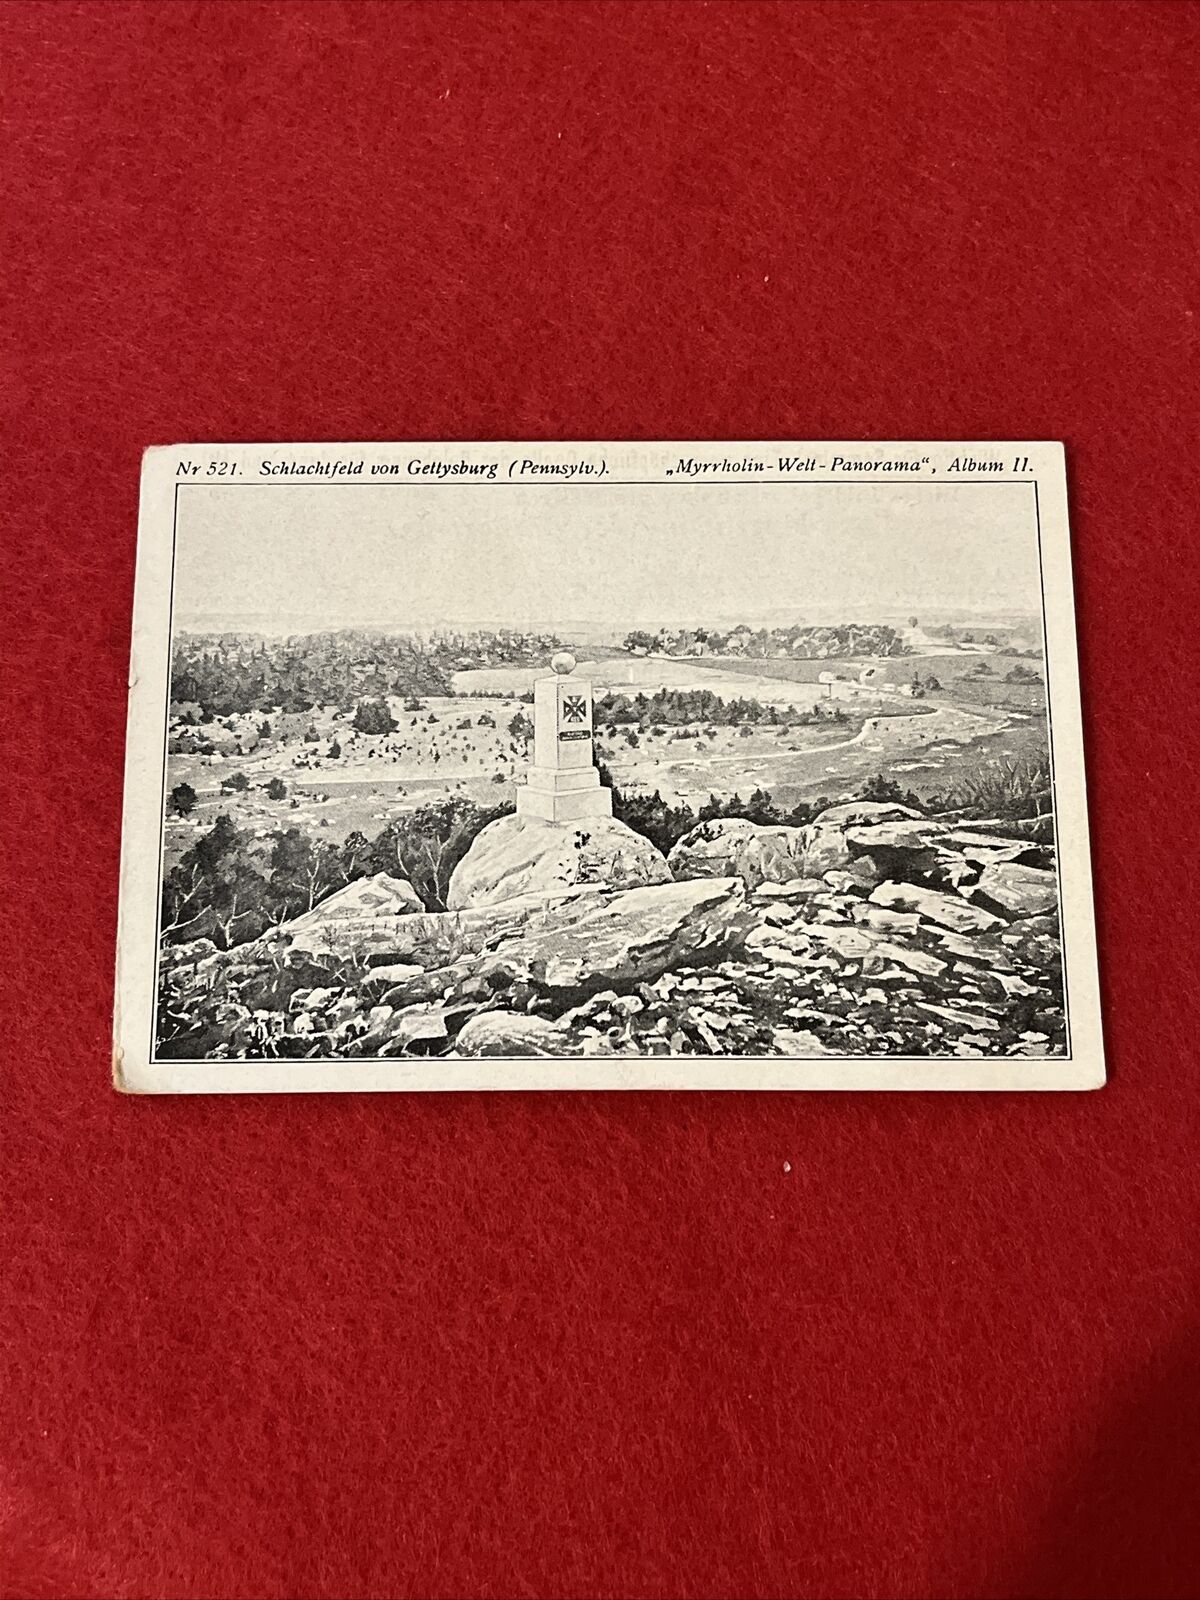 1901 - 1902 Myrrholin Welt Panorama GETTYSBURG Trade Card Album II #521   VG-EX